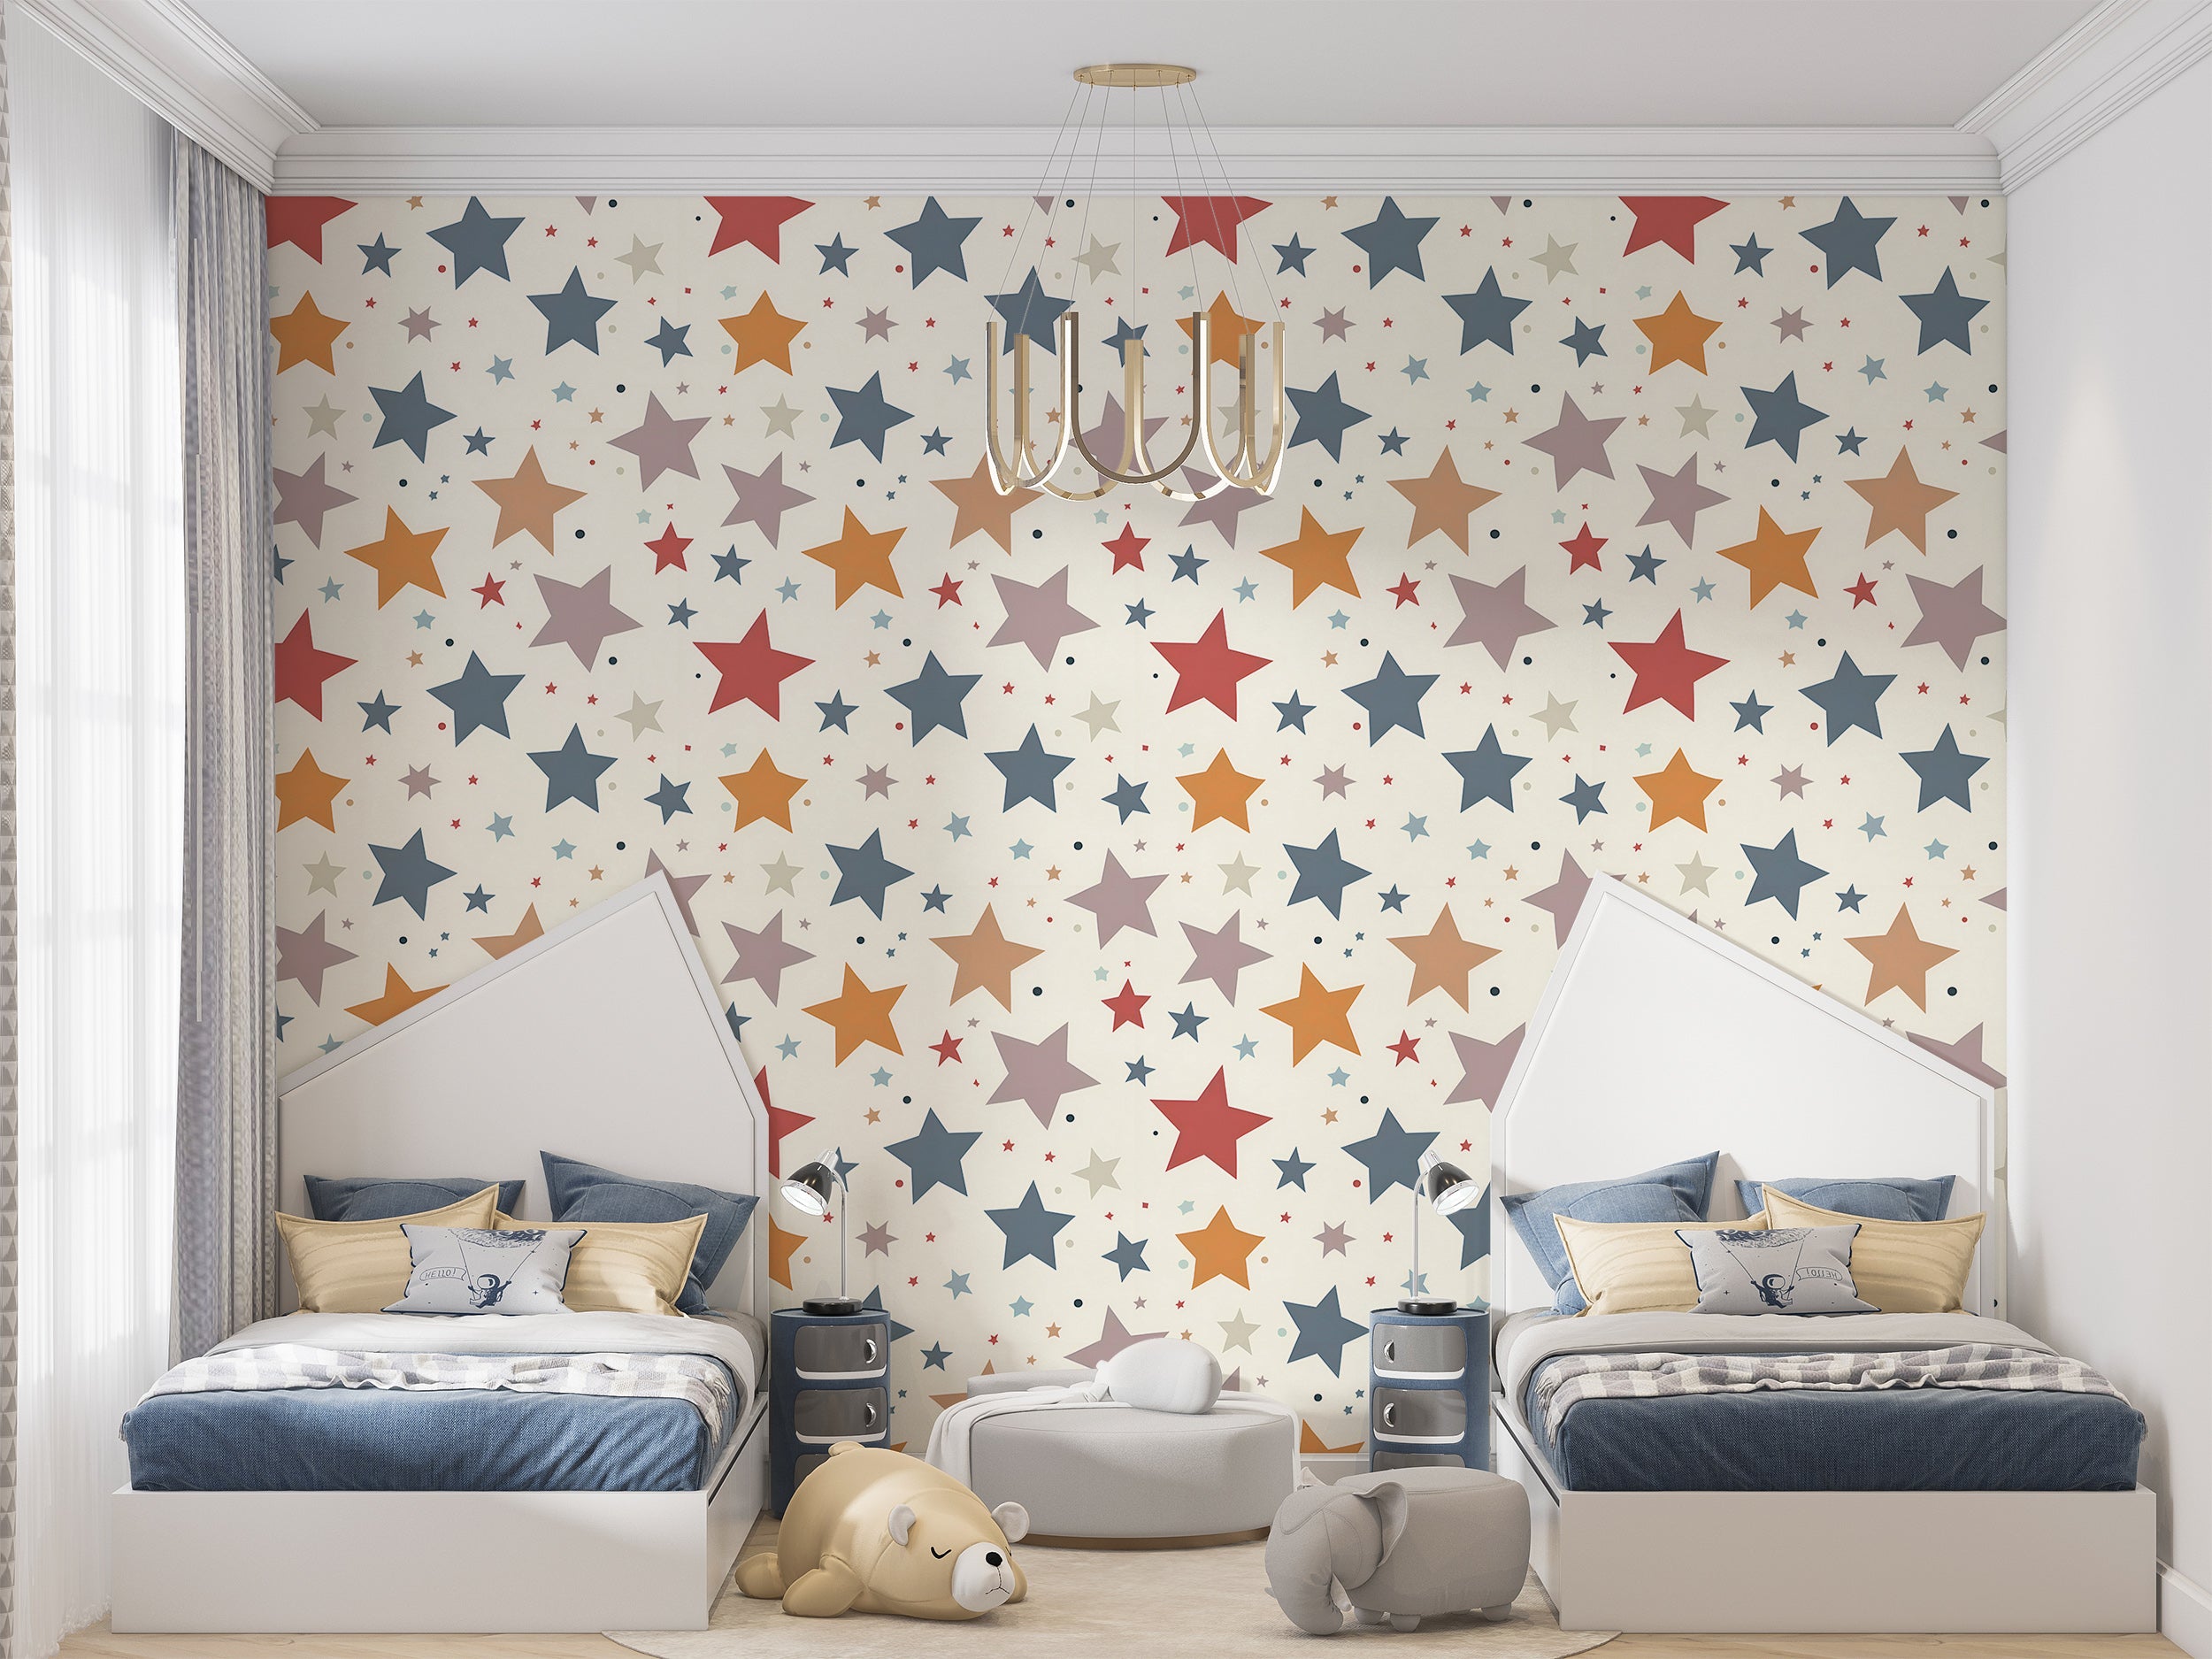 Minimalistic Starry Wallpaper, Stars Wallpaper, Peel and Stick Kids Accent Wall Decor, Removable Star Design Wallpaper, PVC-free